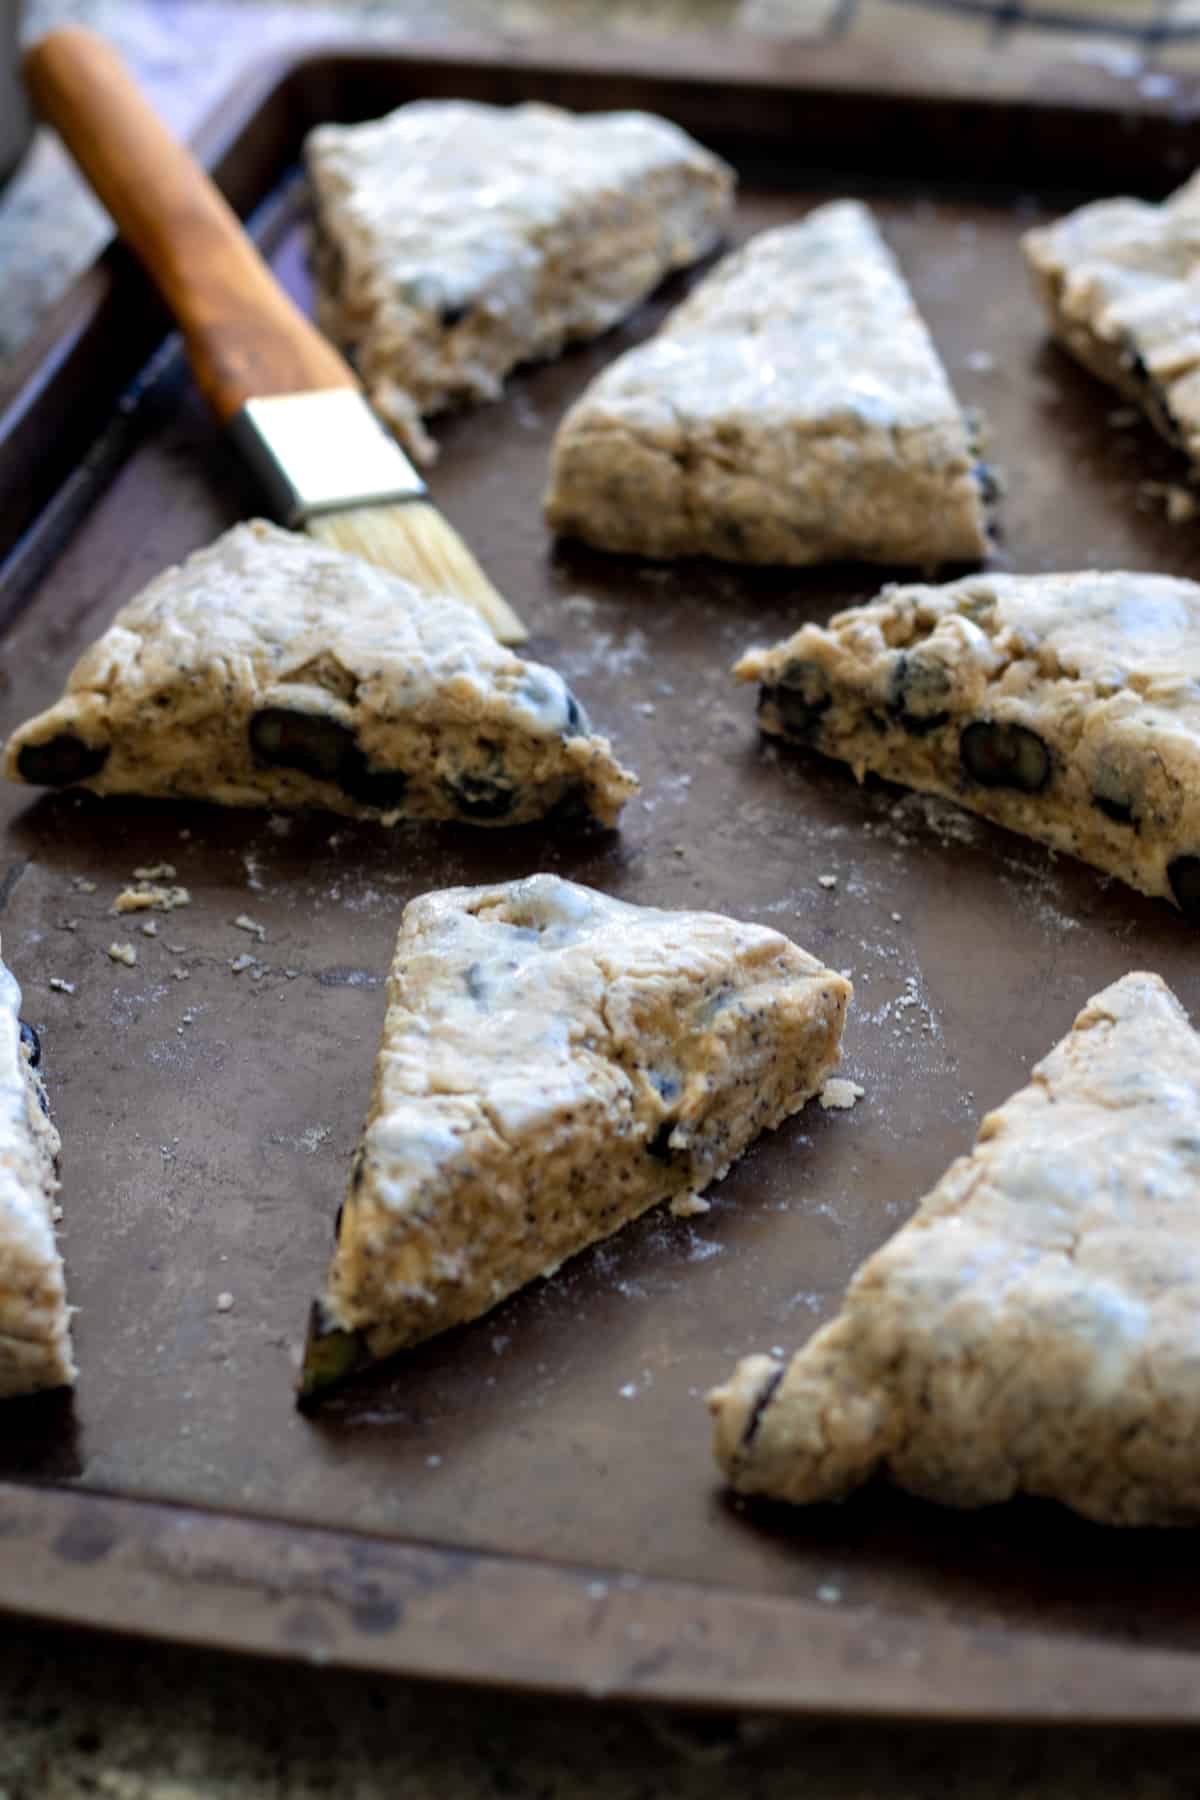 8 scone triangles brushed with vegan yogurt on baking sheet before baking